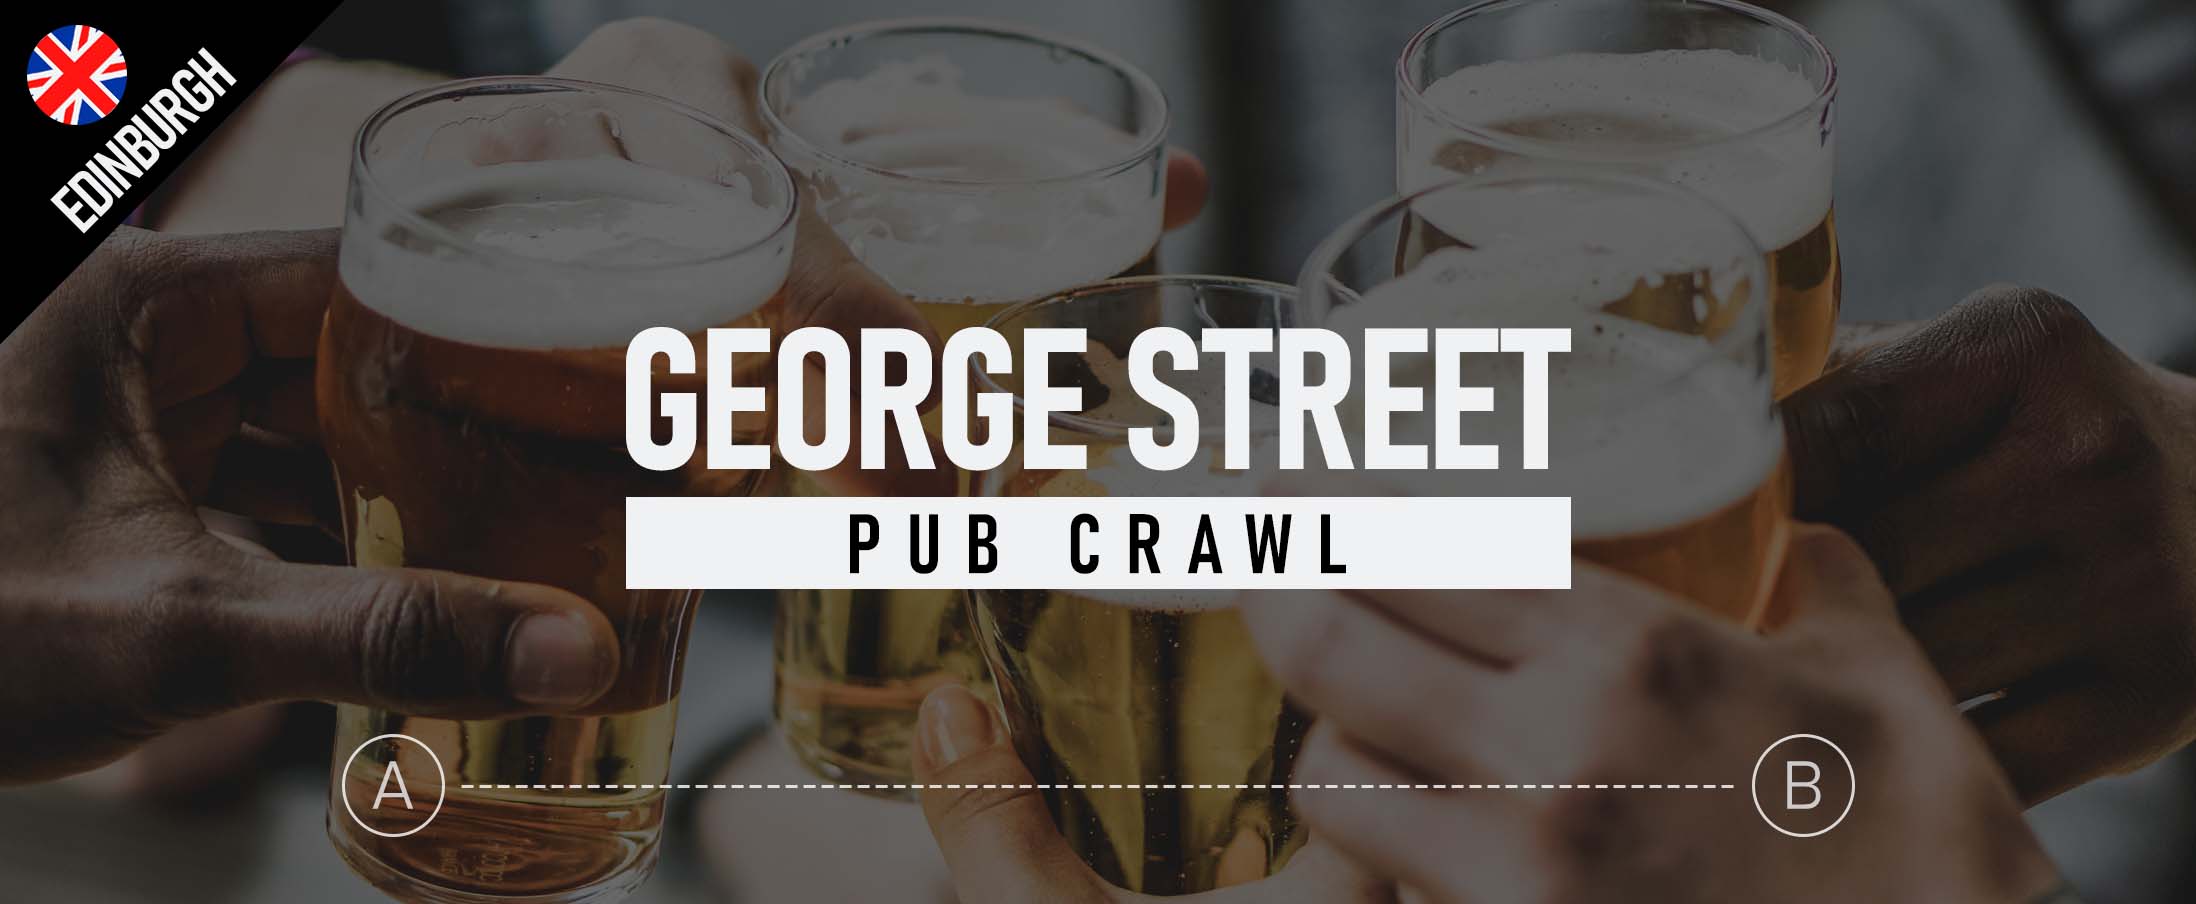 Edinburgh George Street Pub Crawl 